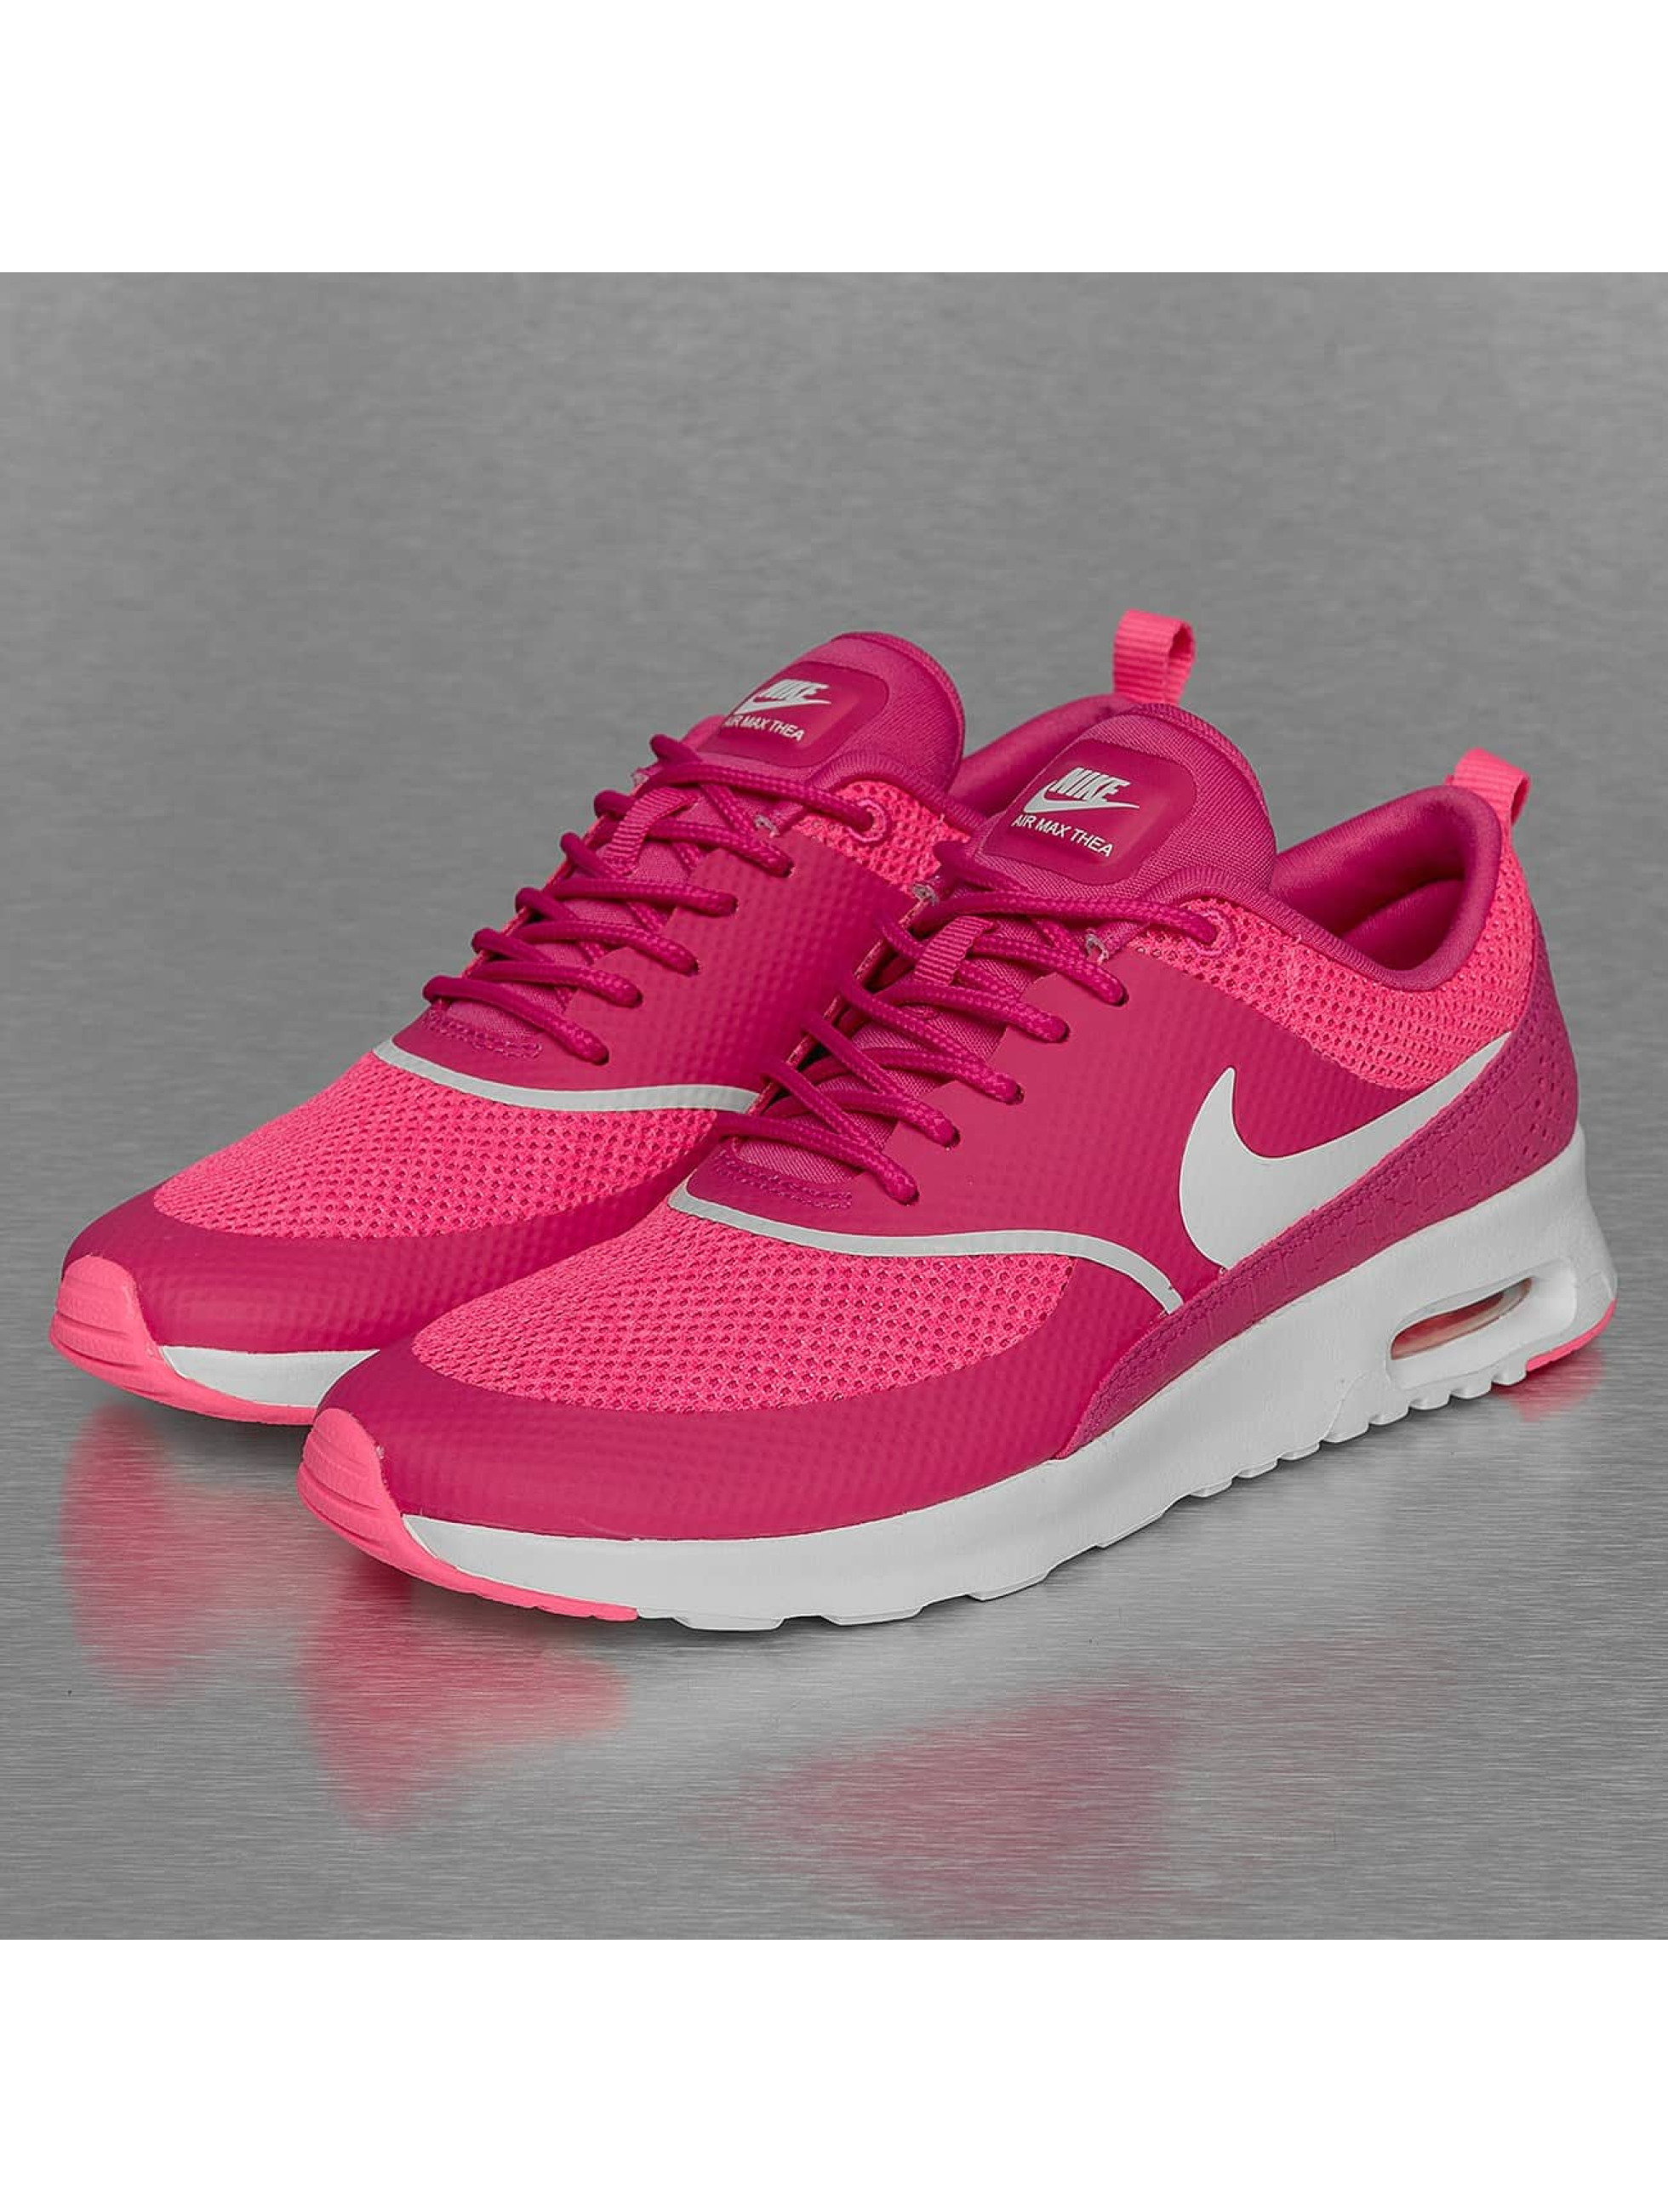 Nike schoen / sneaker Air Max Thea in pink